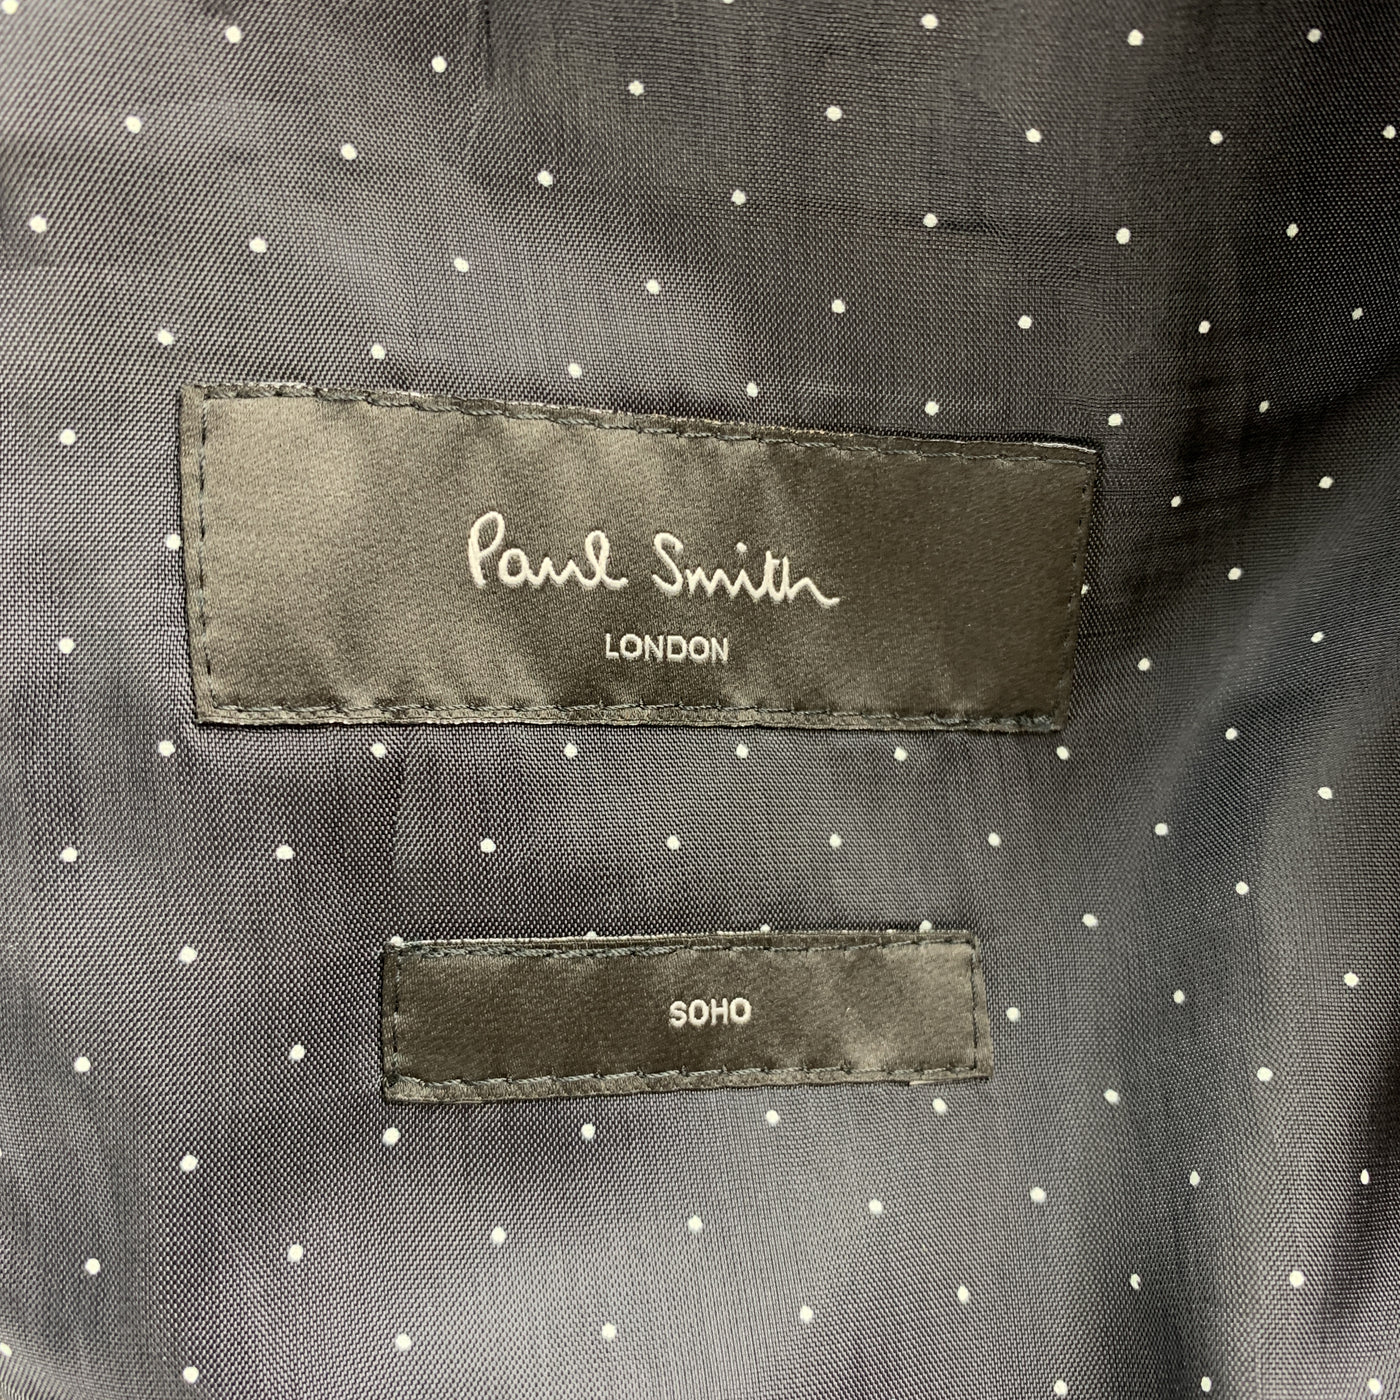 PAUL SMITH Black Solid Wool Size 44 Shawl Collar Sport Coat